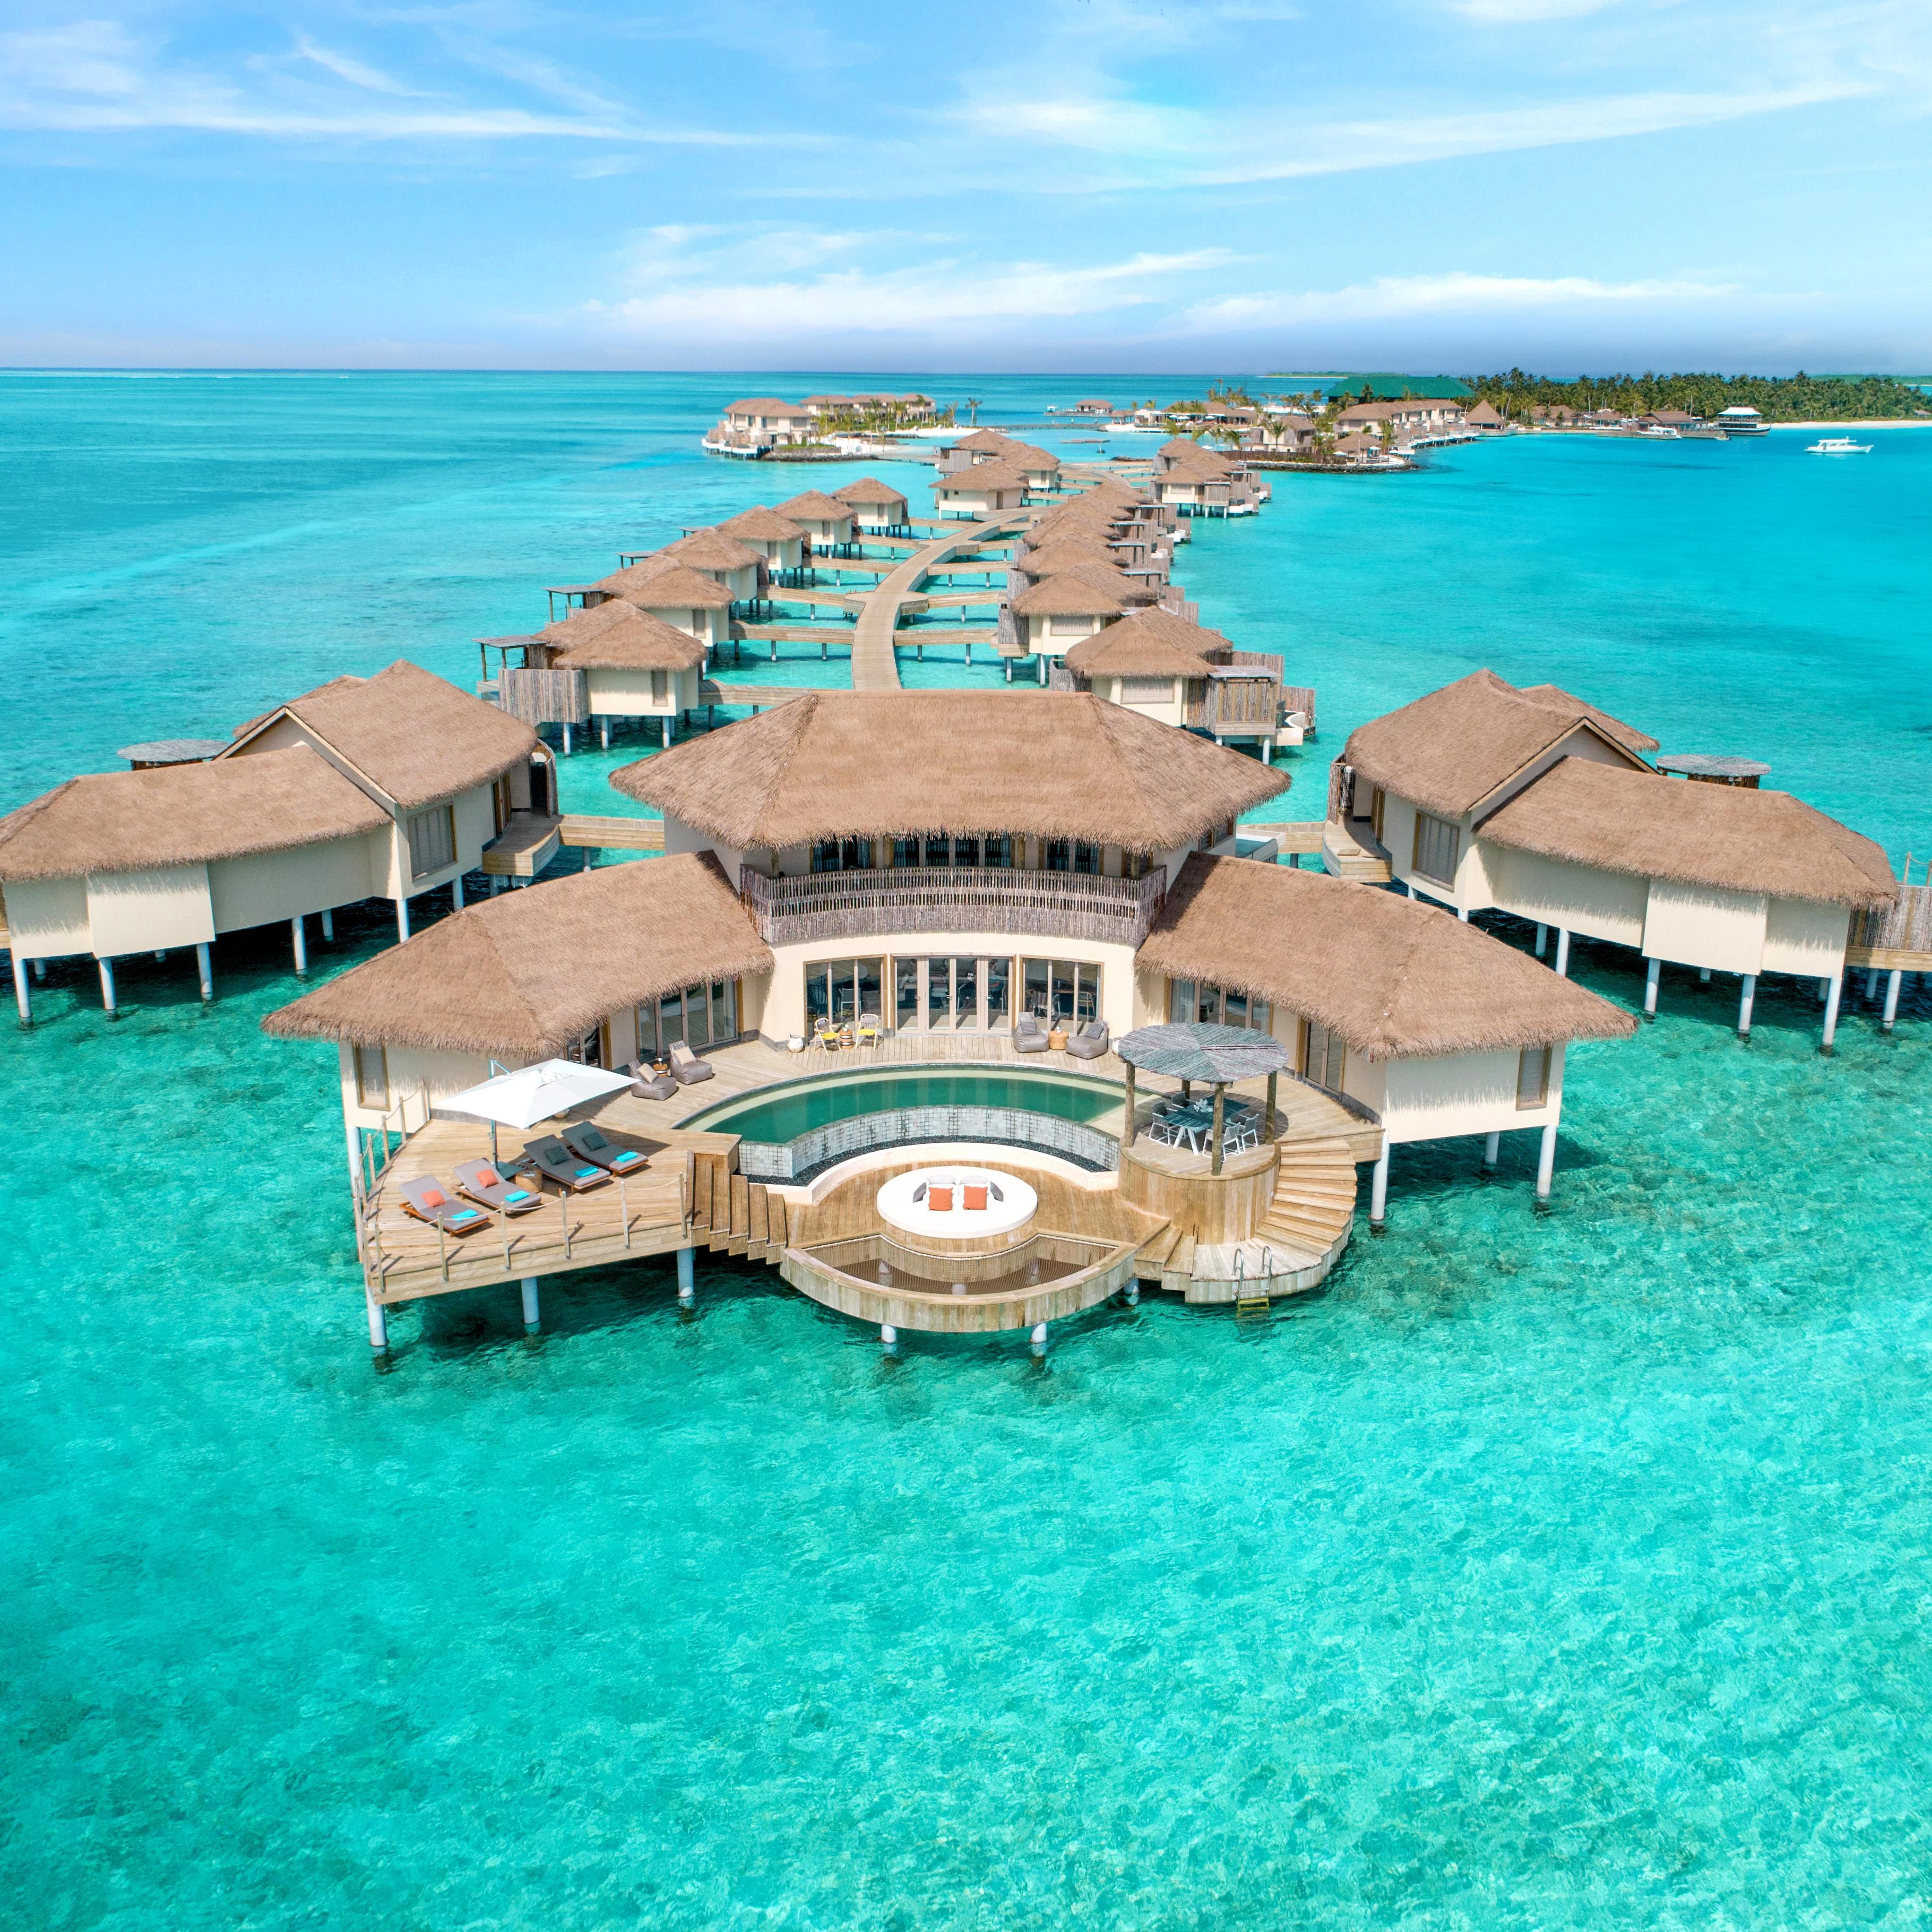 can we visit maldives in april